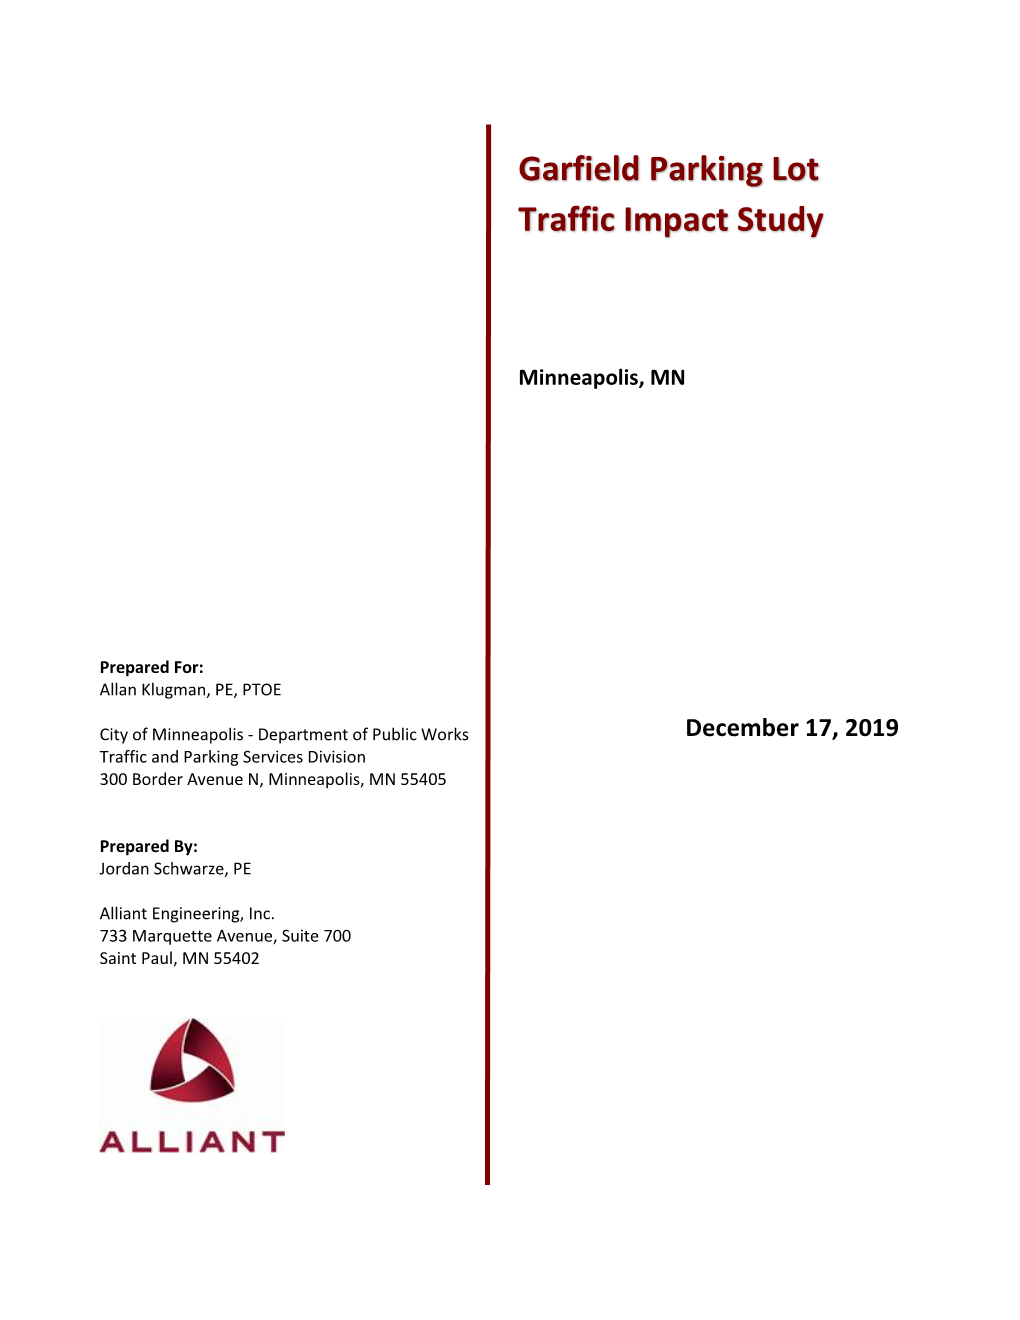 Garfield Parking Lot Traffic Impact Study, December 2019